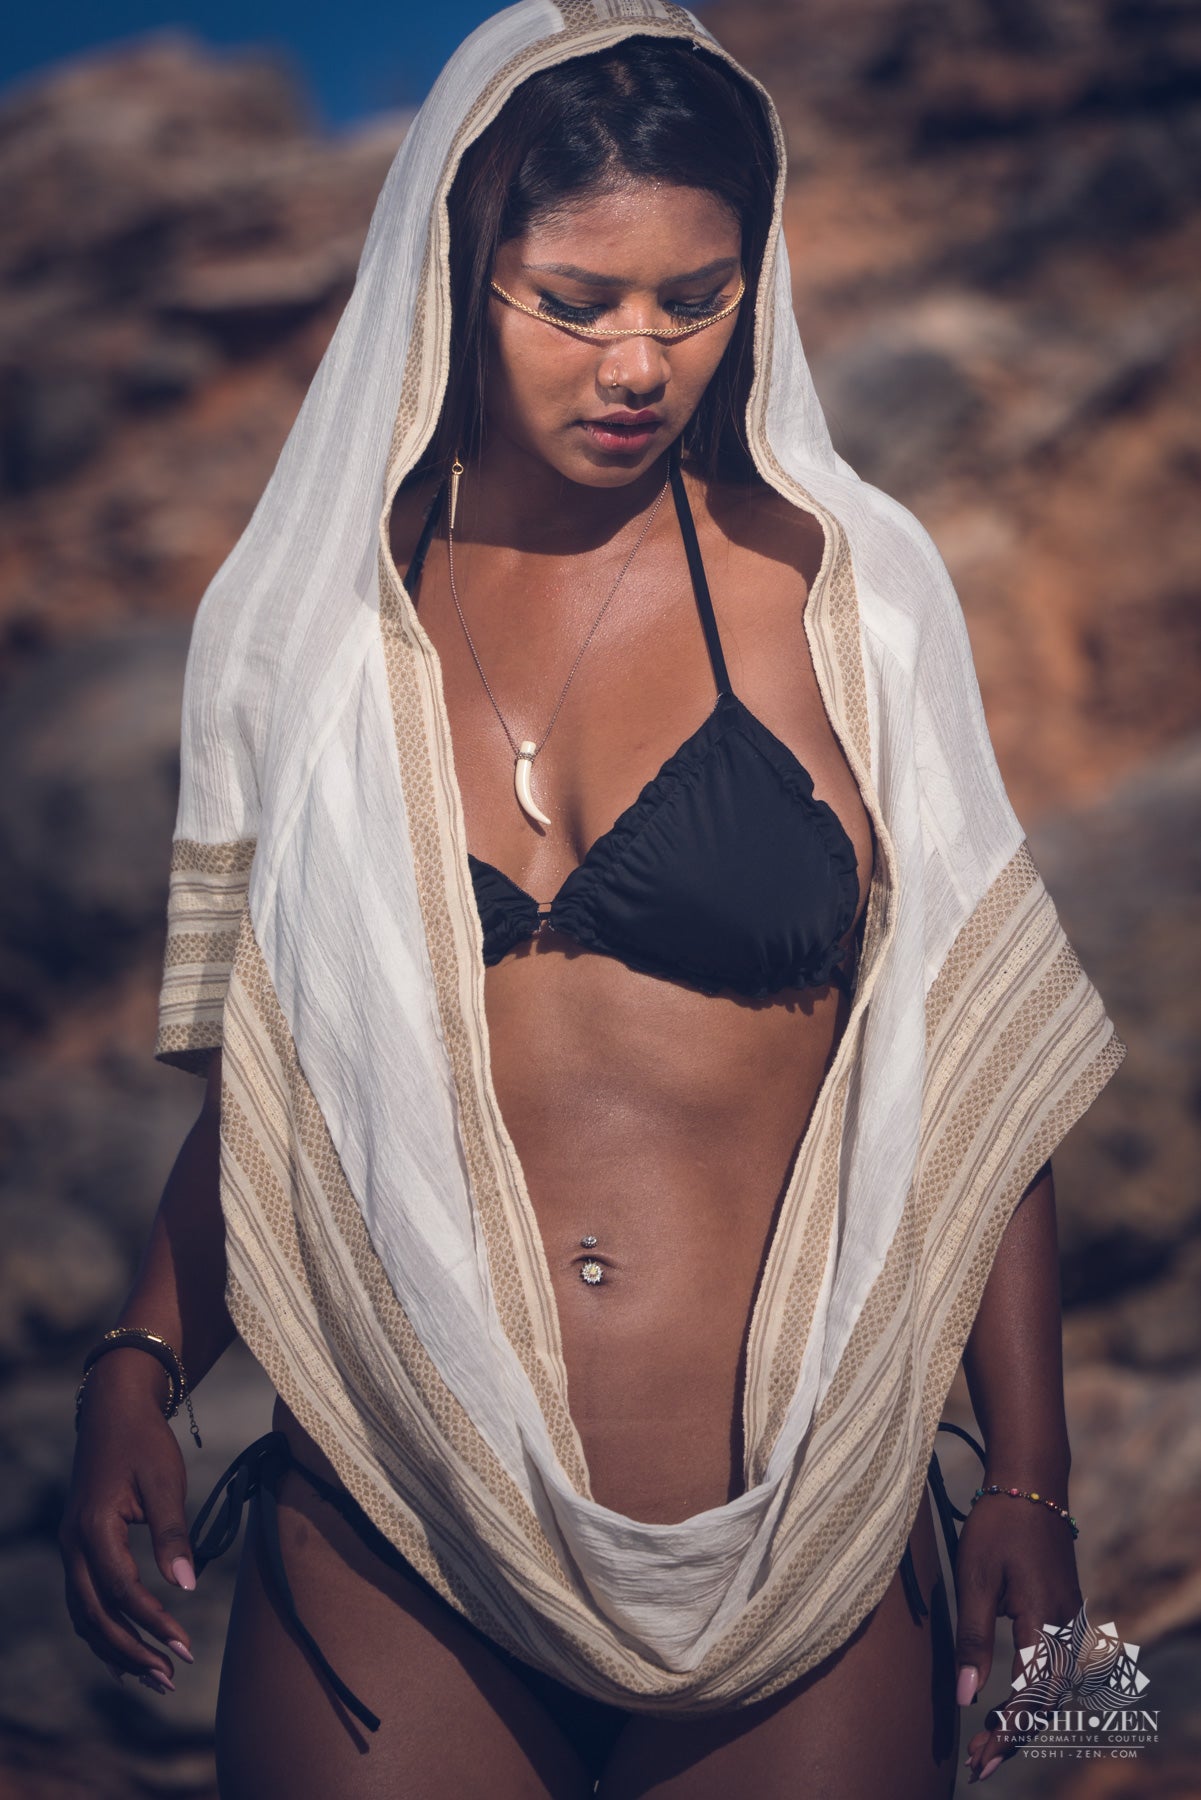 Sandwind Bedouin Hood